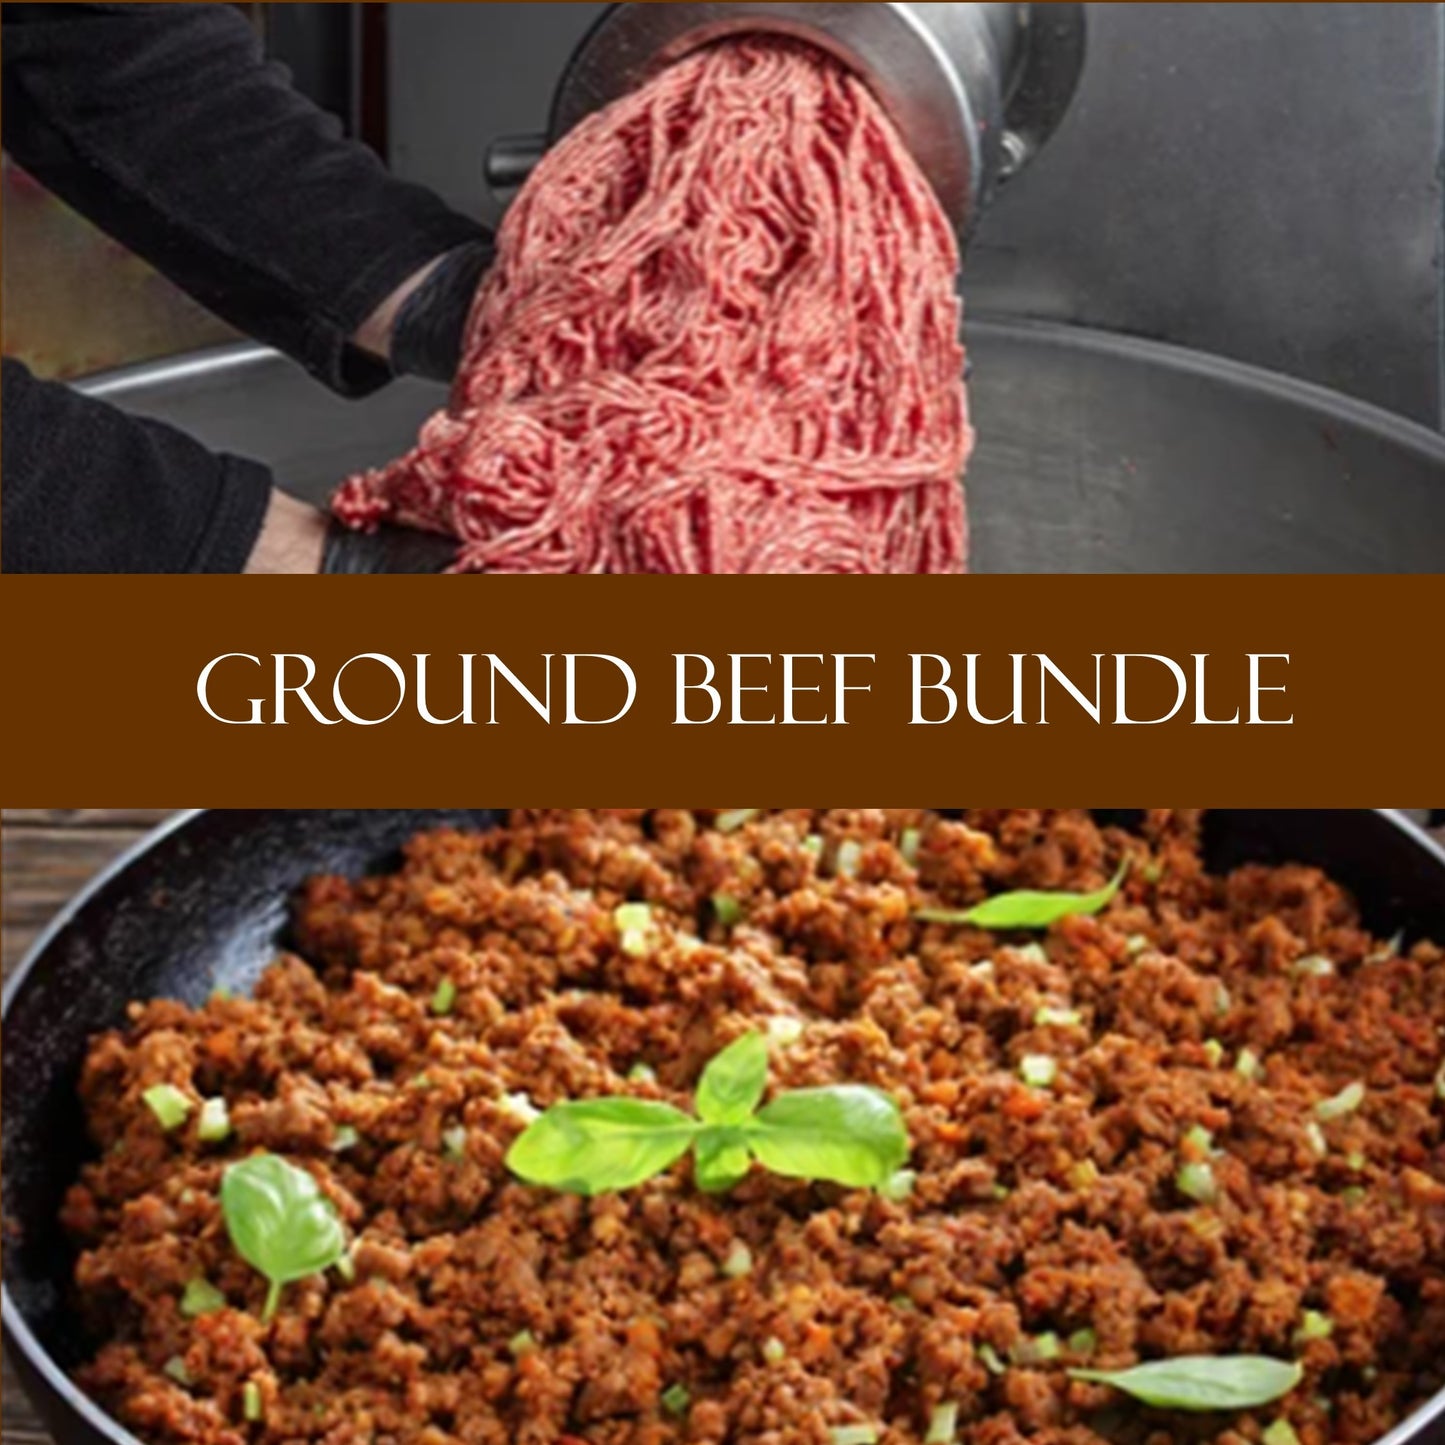 Signature Ground Beef Bundle